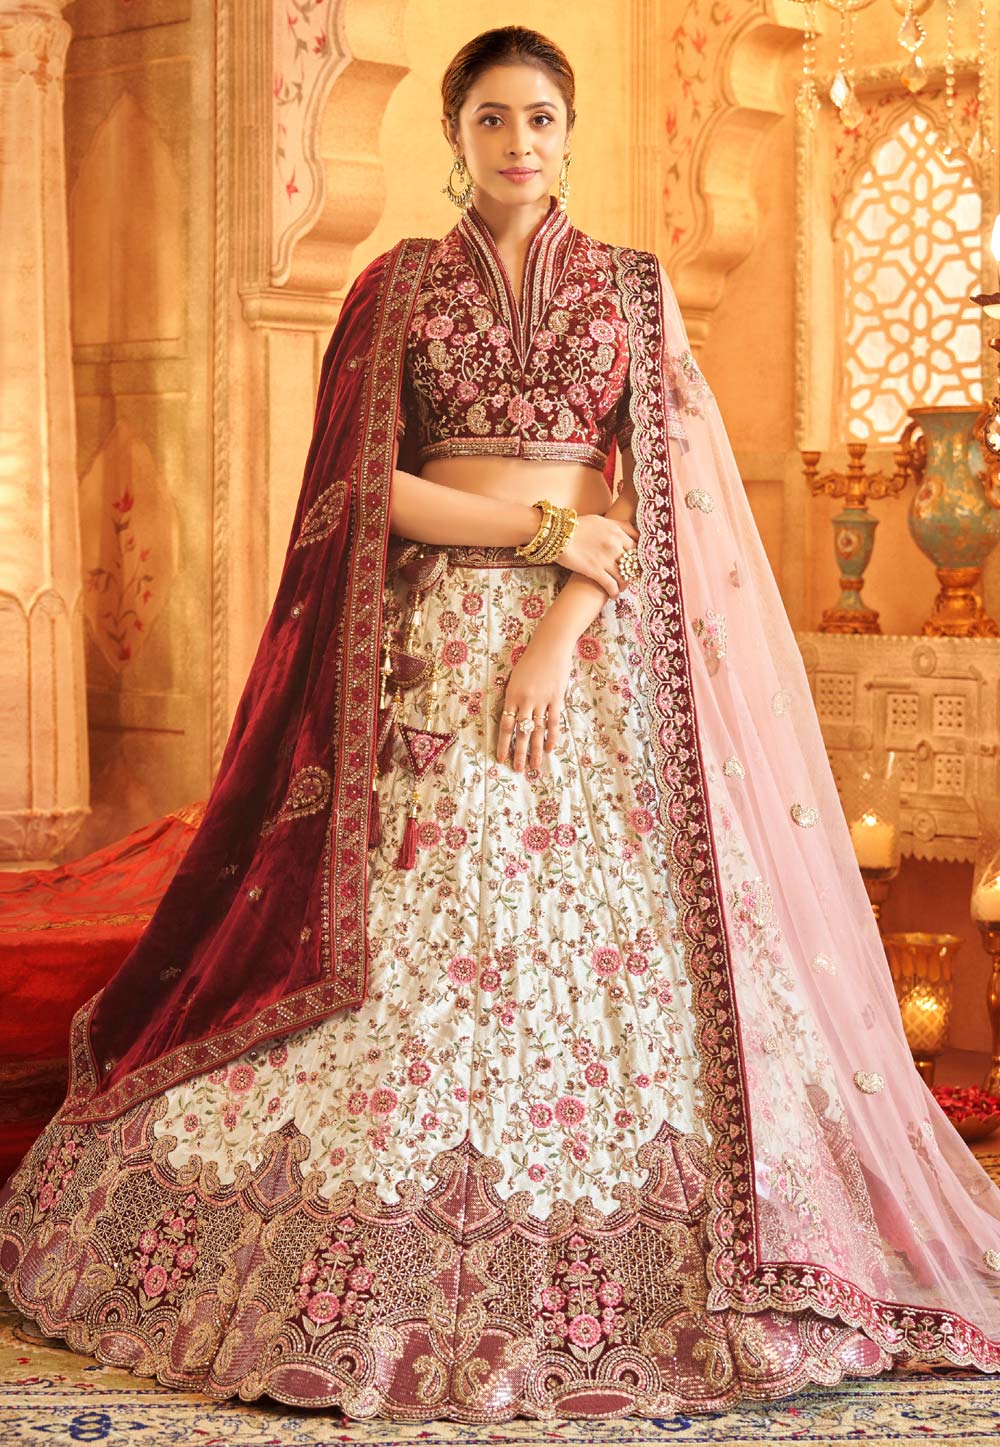 A Royal Destination Wedding With The Bride In A Stunning Red & White Lehenga  | Gaun pengantin india, Pakaian pengantin india, Pengantin india